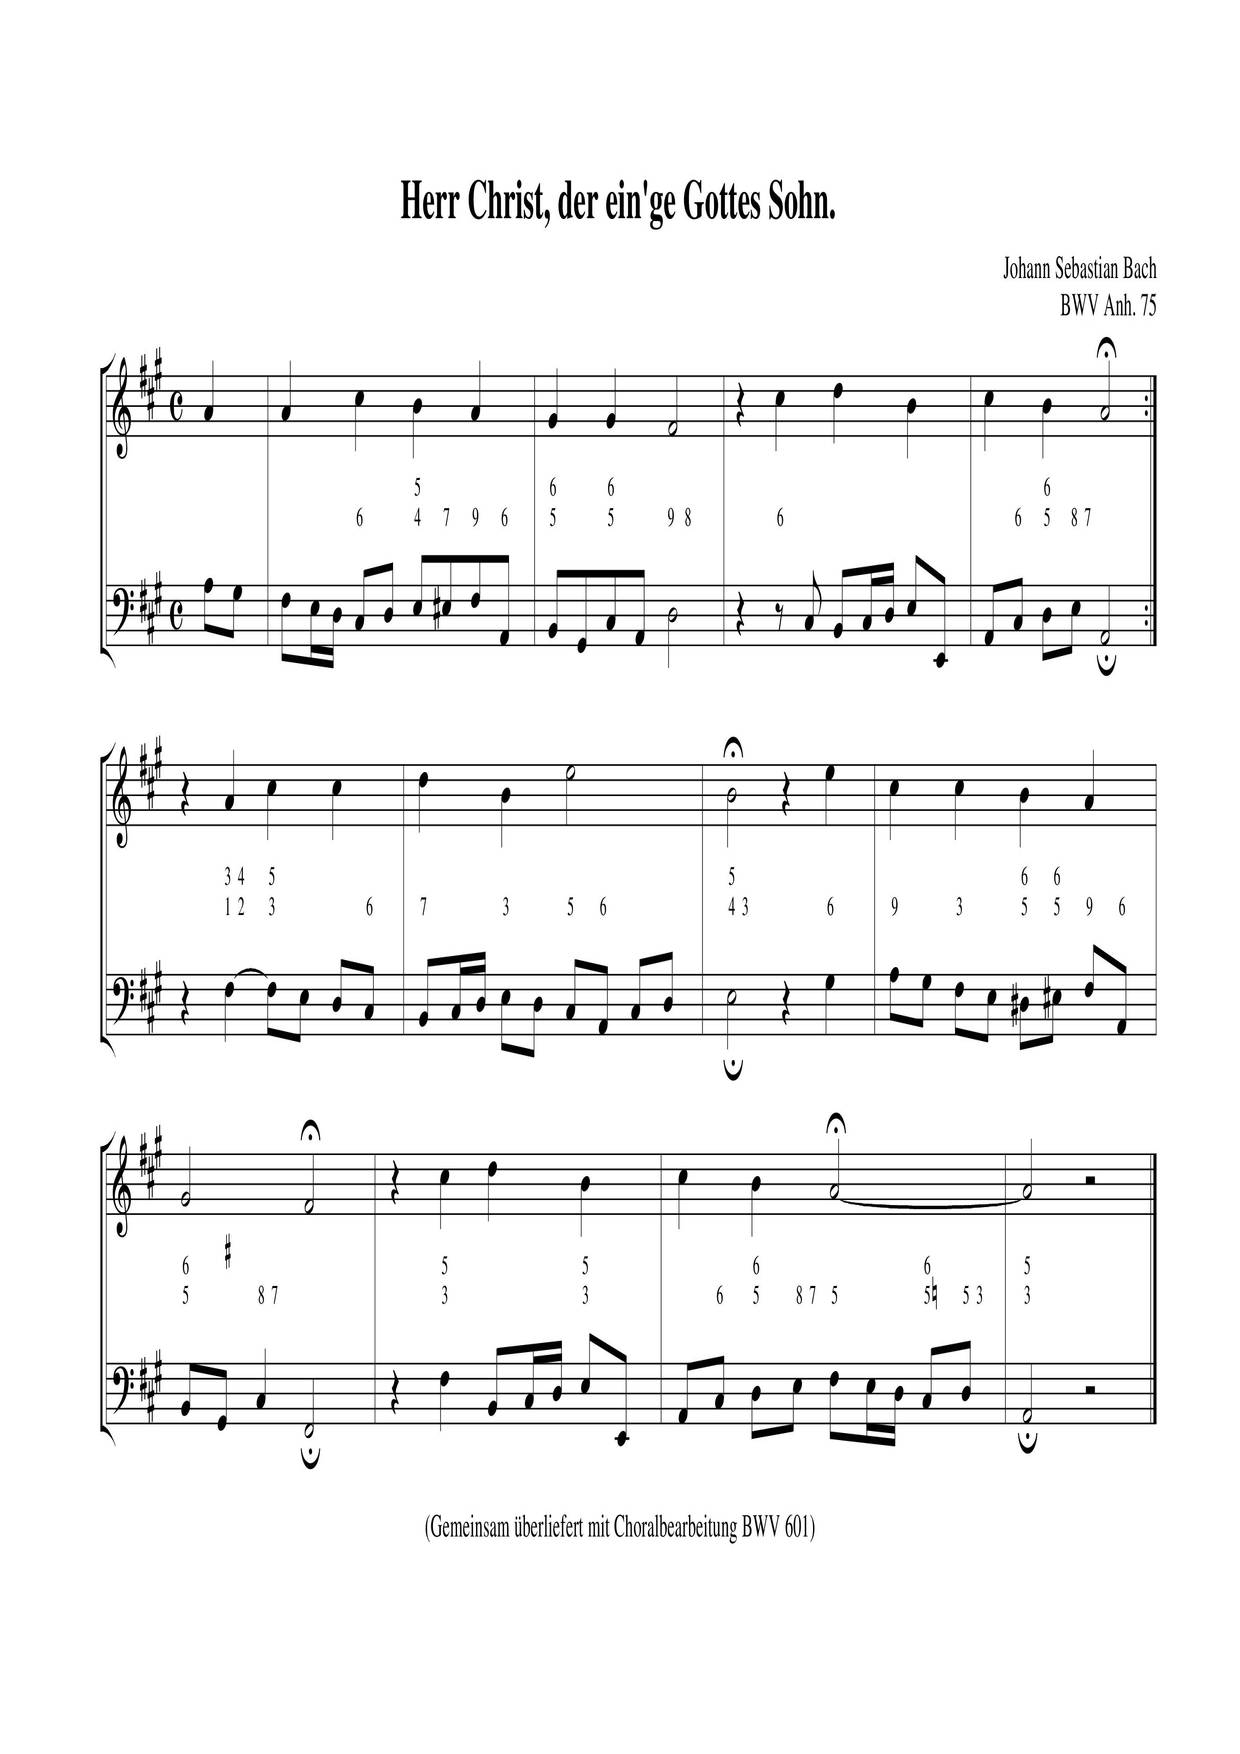 Herr Christ, Der Einge Gottessohn, BWV Anh. 75ピアノ譜